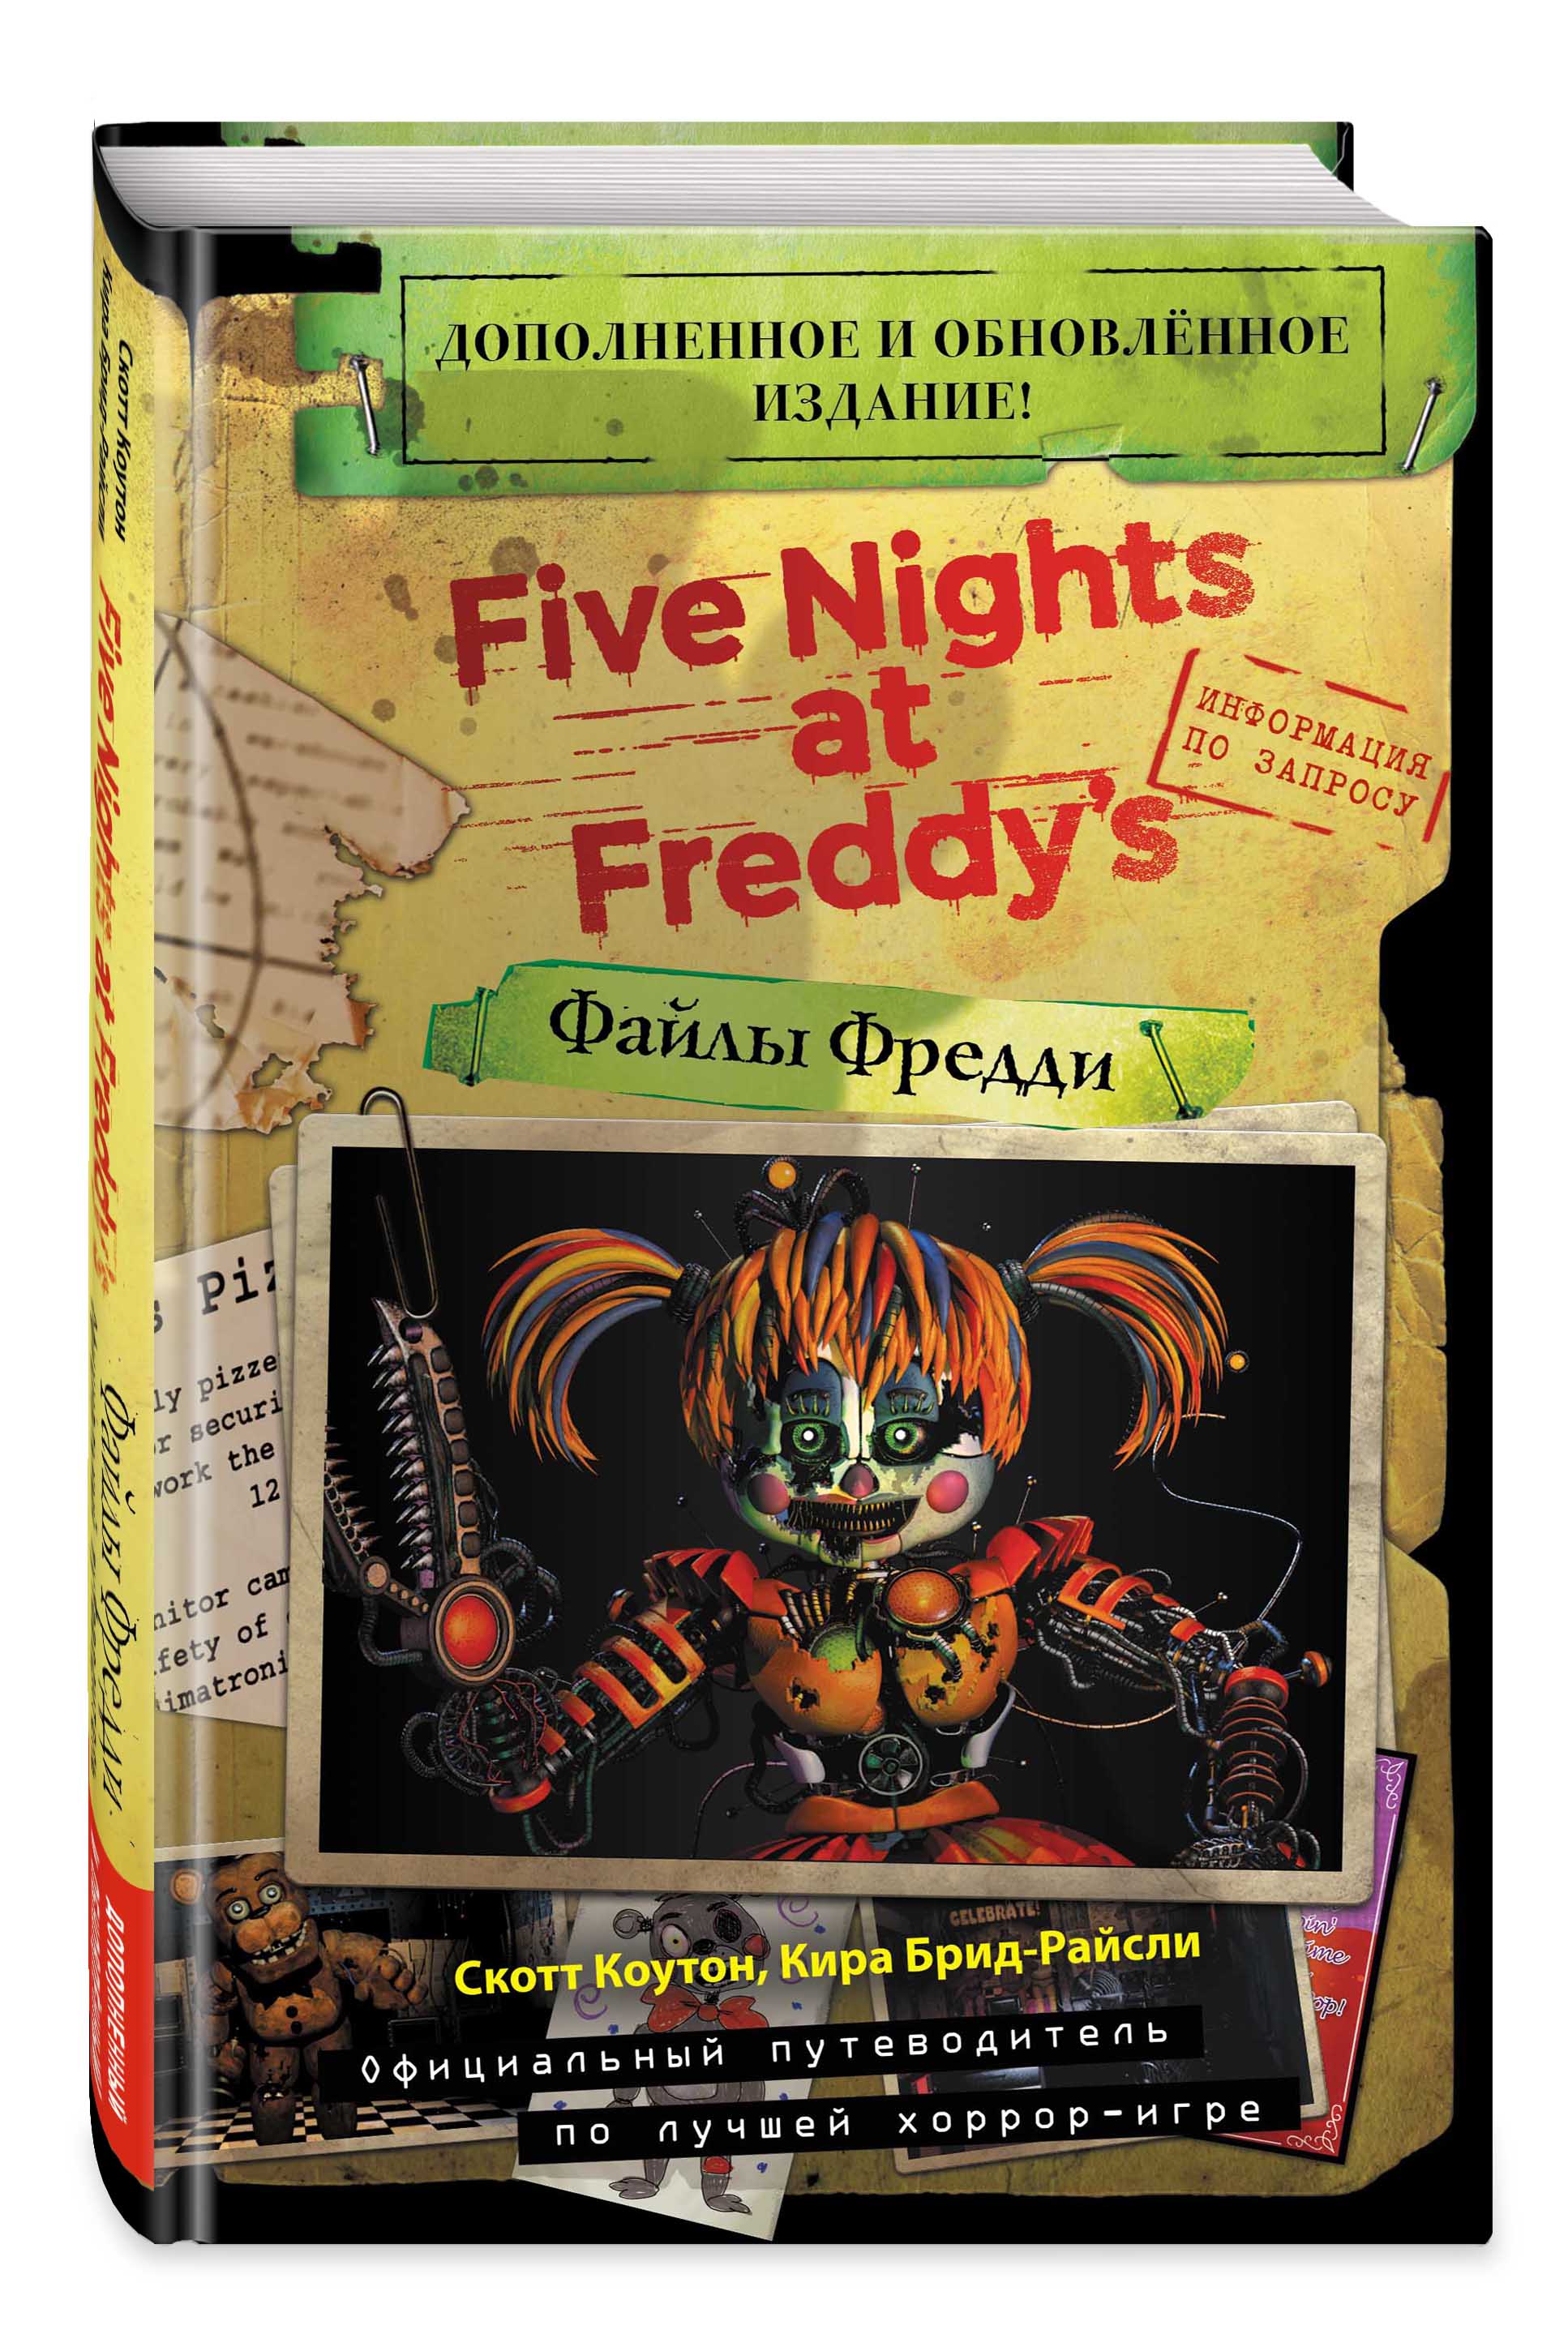 Книга файлы фнафа. Книга ФНАФ файлы Фредди обновленное издание. Книга ФНАФ файлы Фредди новое издание. Скотт Коутон файлы Фредди. Книга Five Nights at Freddy's файлы Фредди.